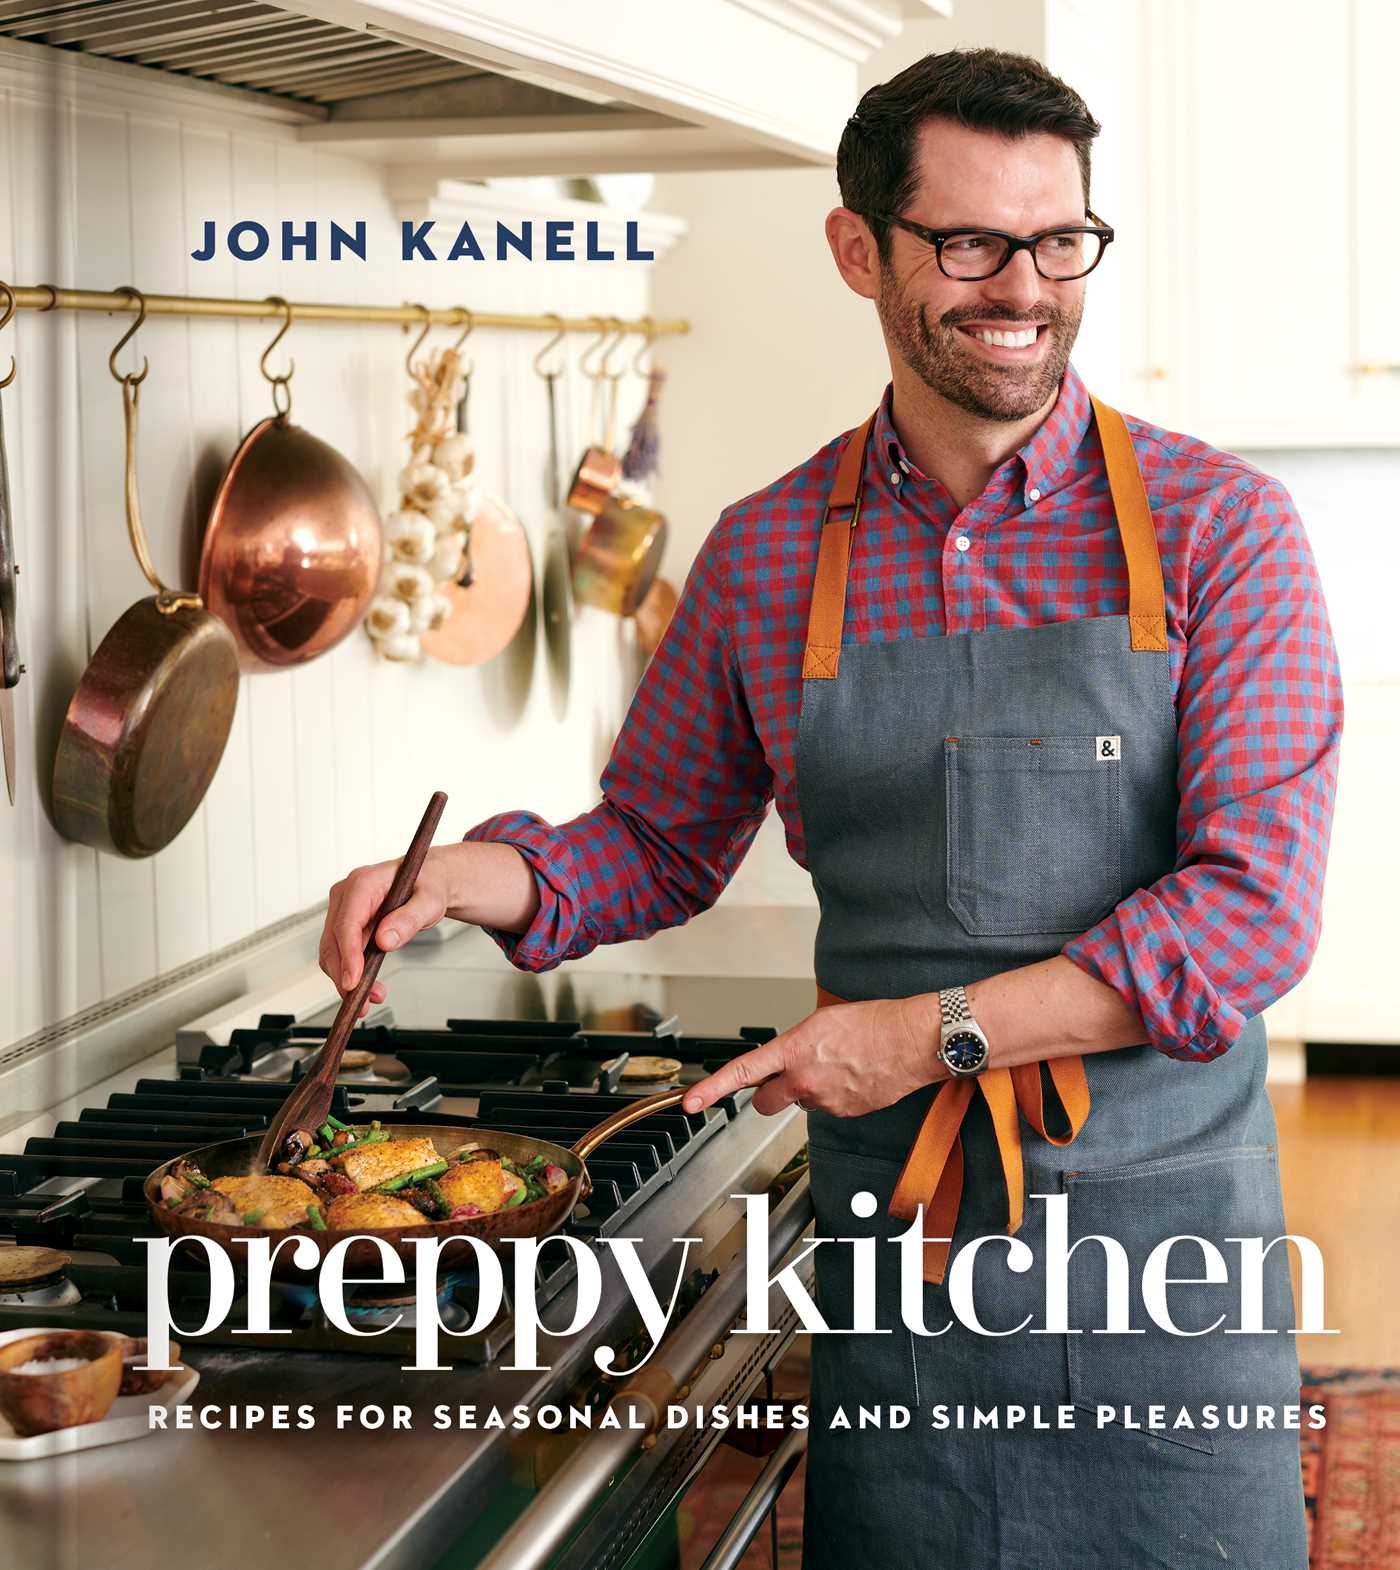 Image for "Preppy Kitchen"